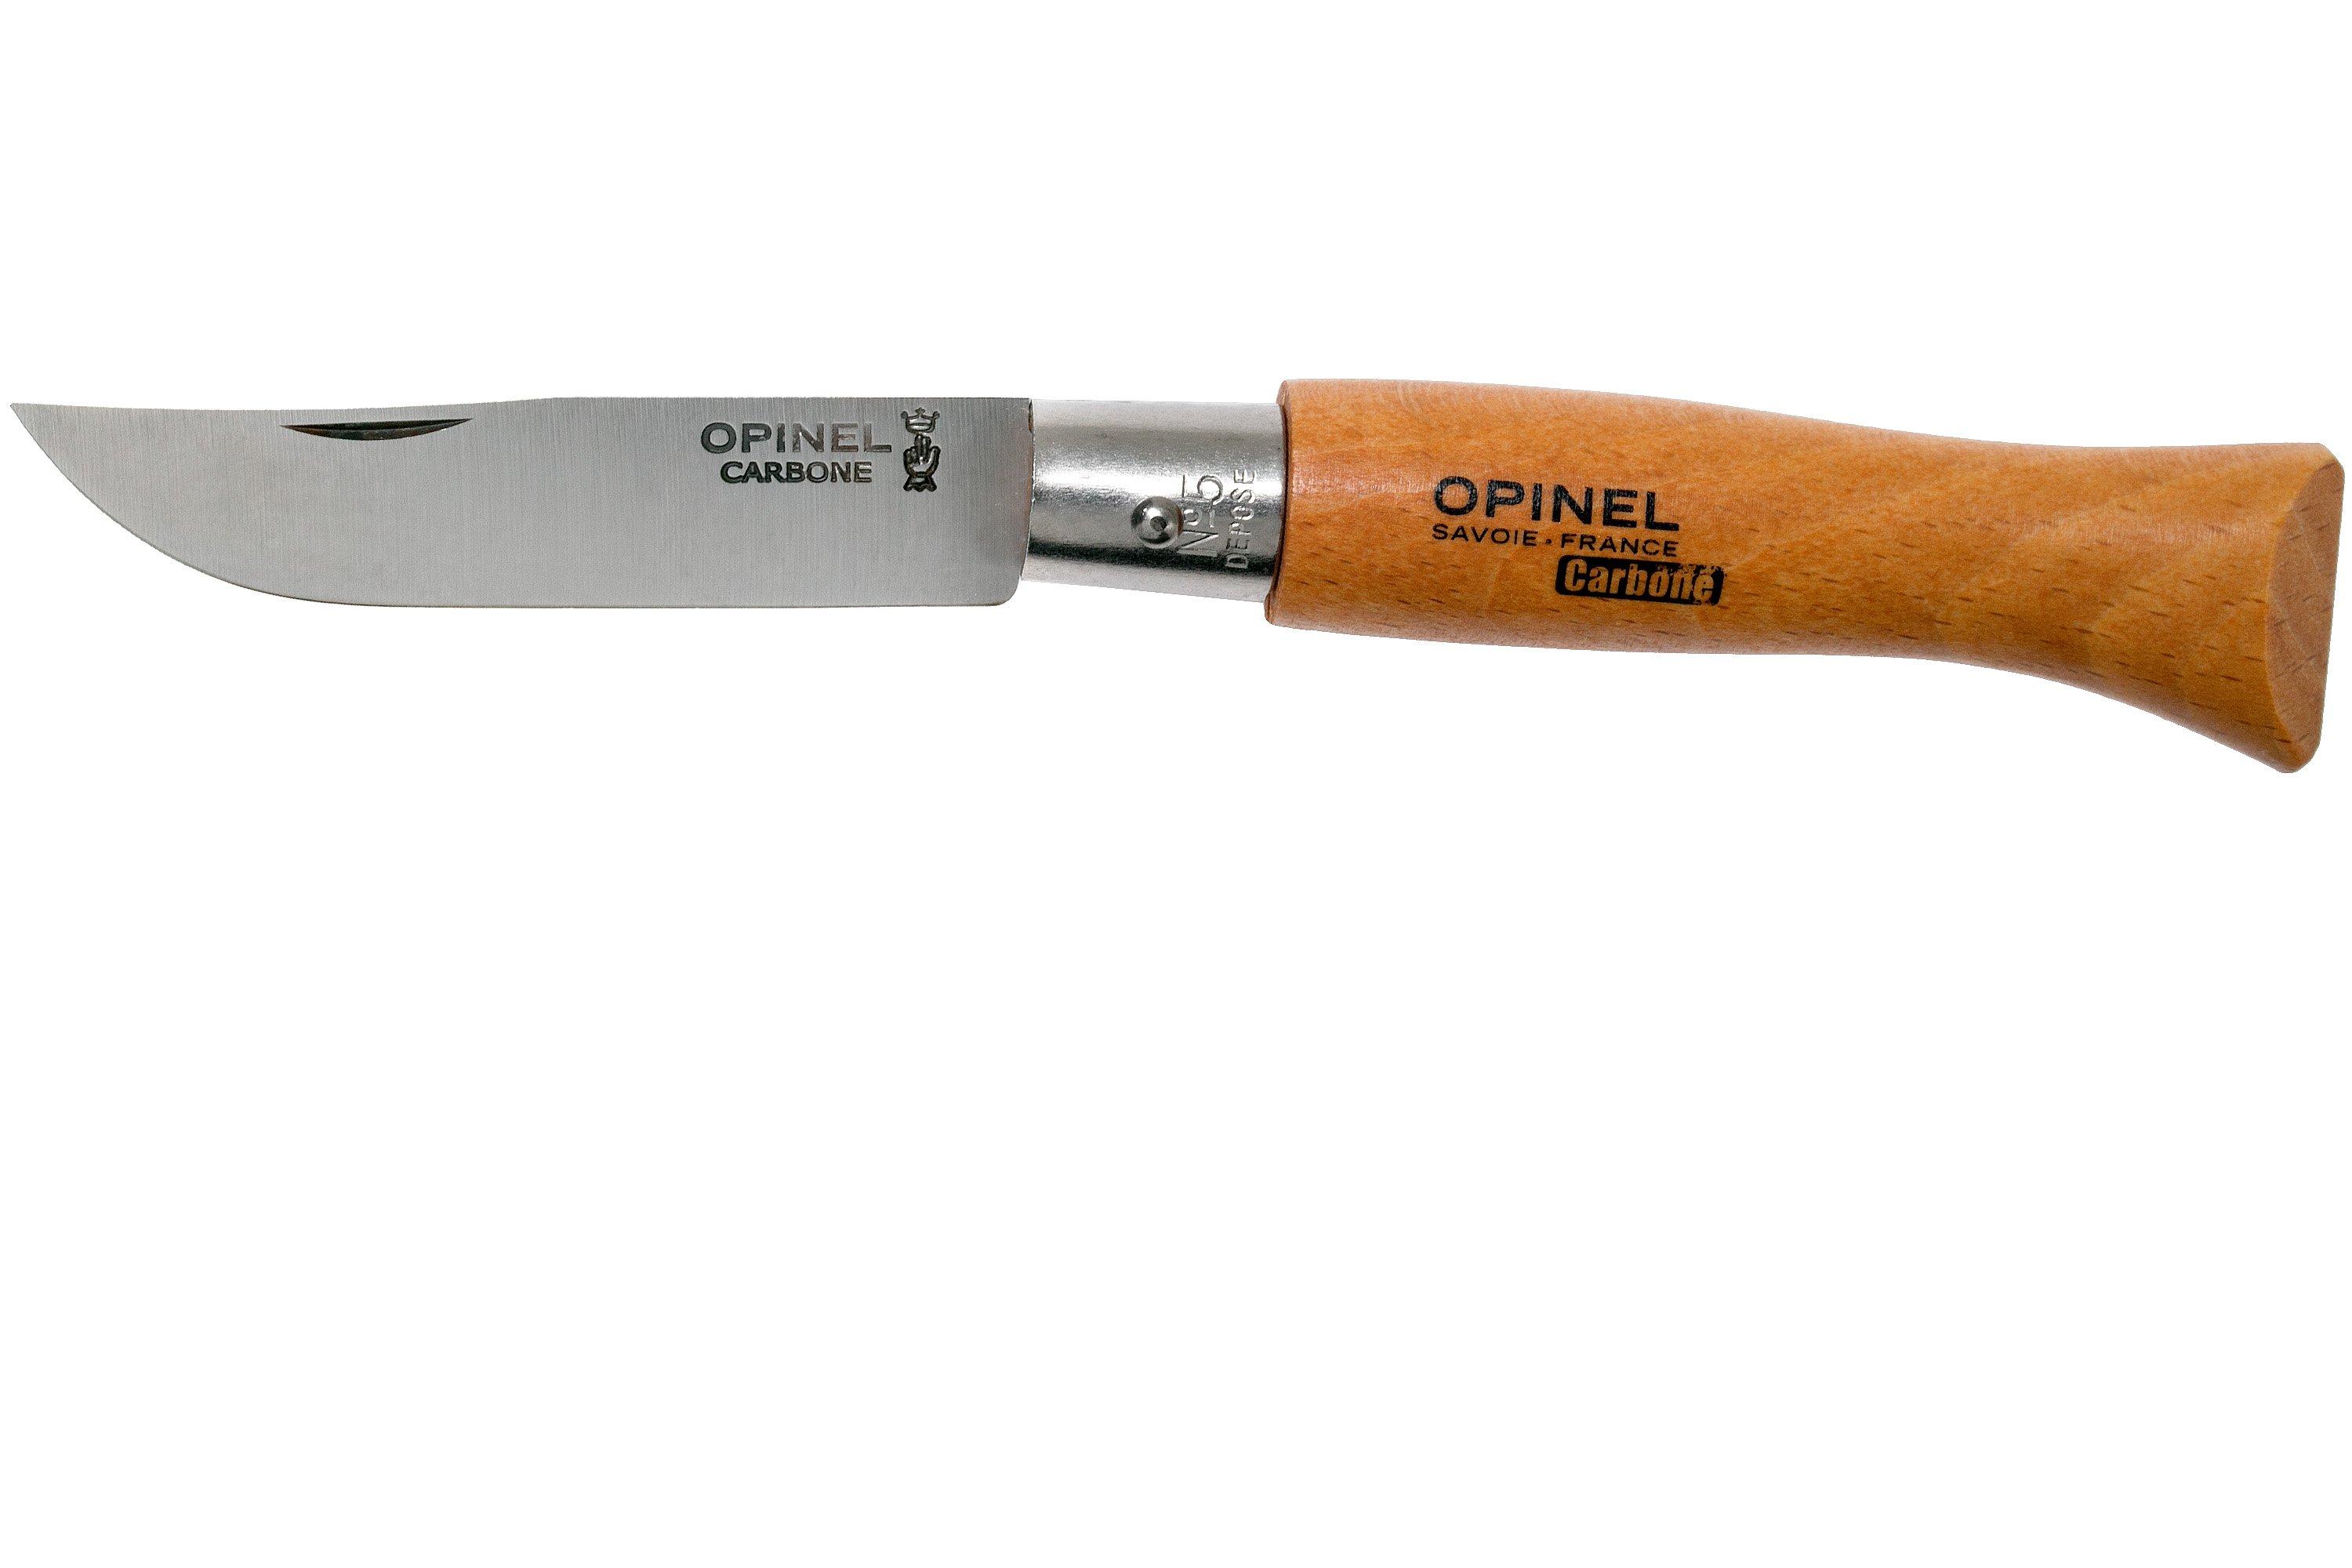 No. 05 pocket knife, carbon steel, length 6 | Advantageously shopping at Knivesandtools.com